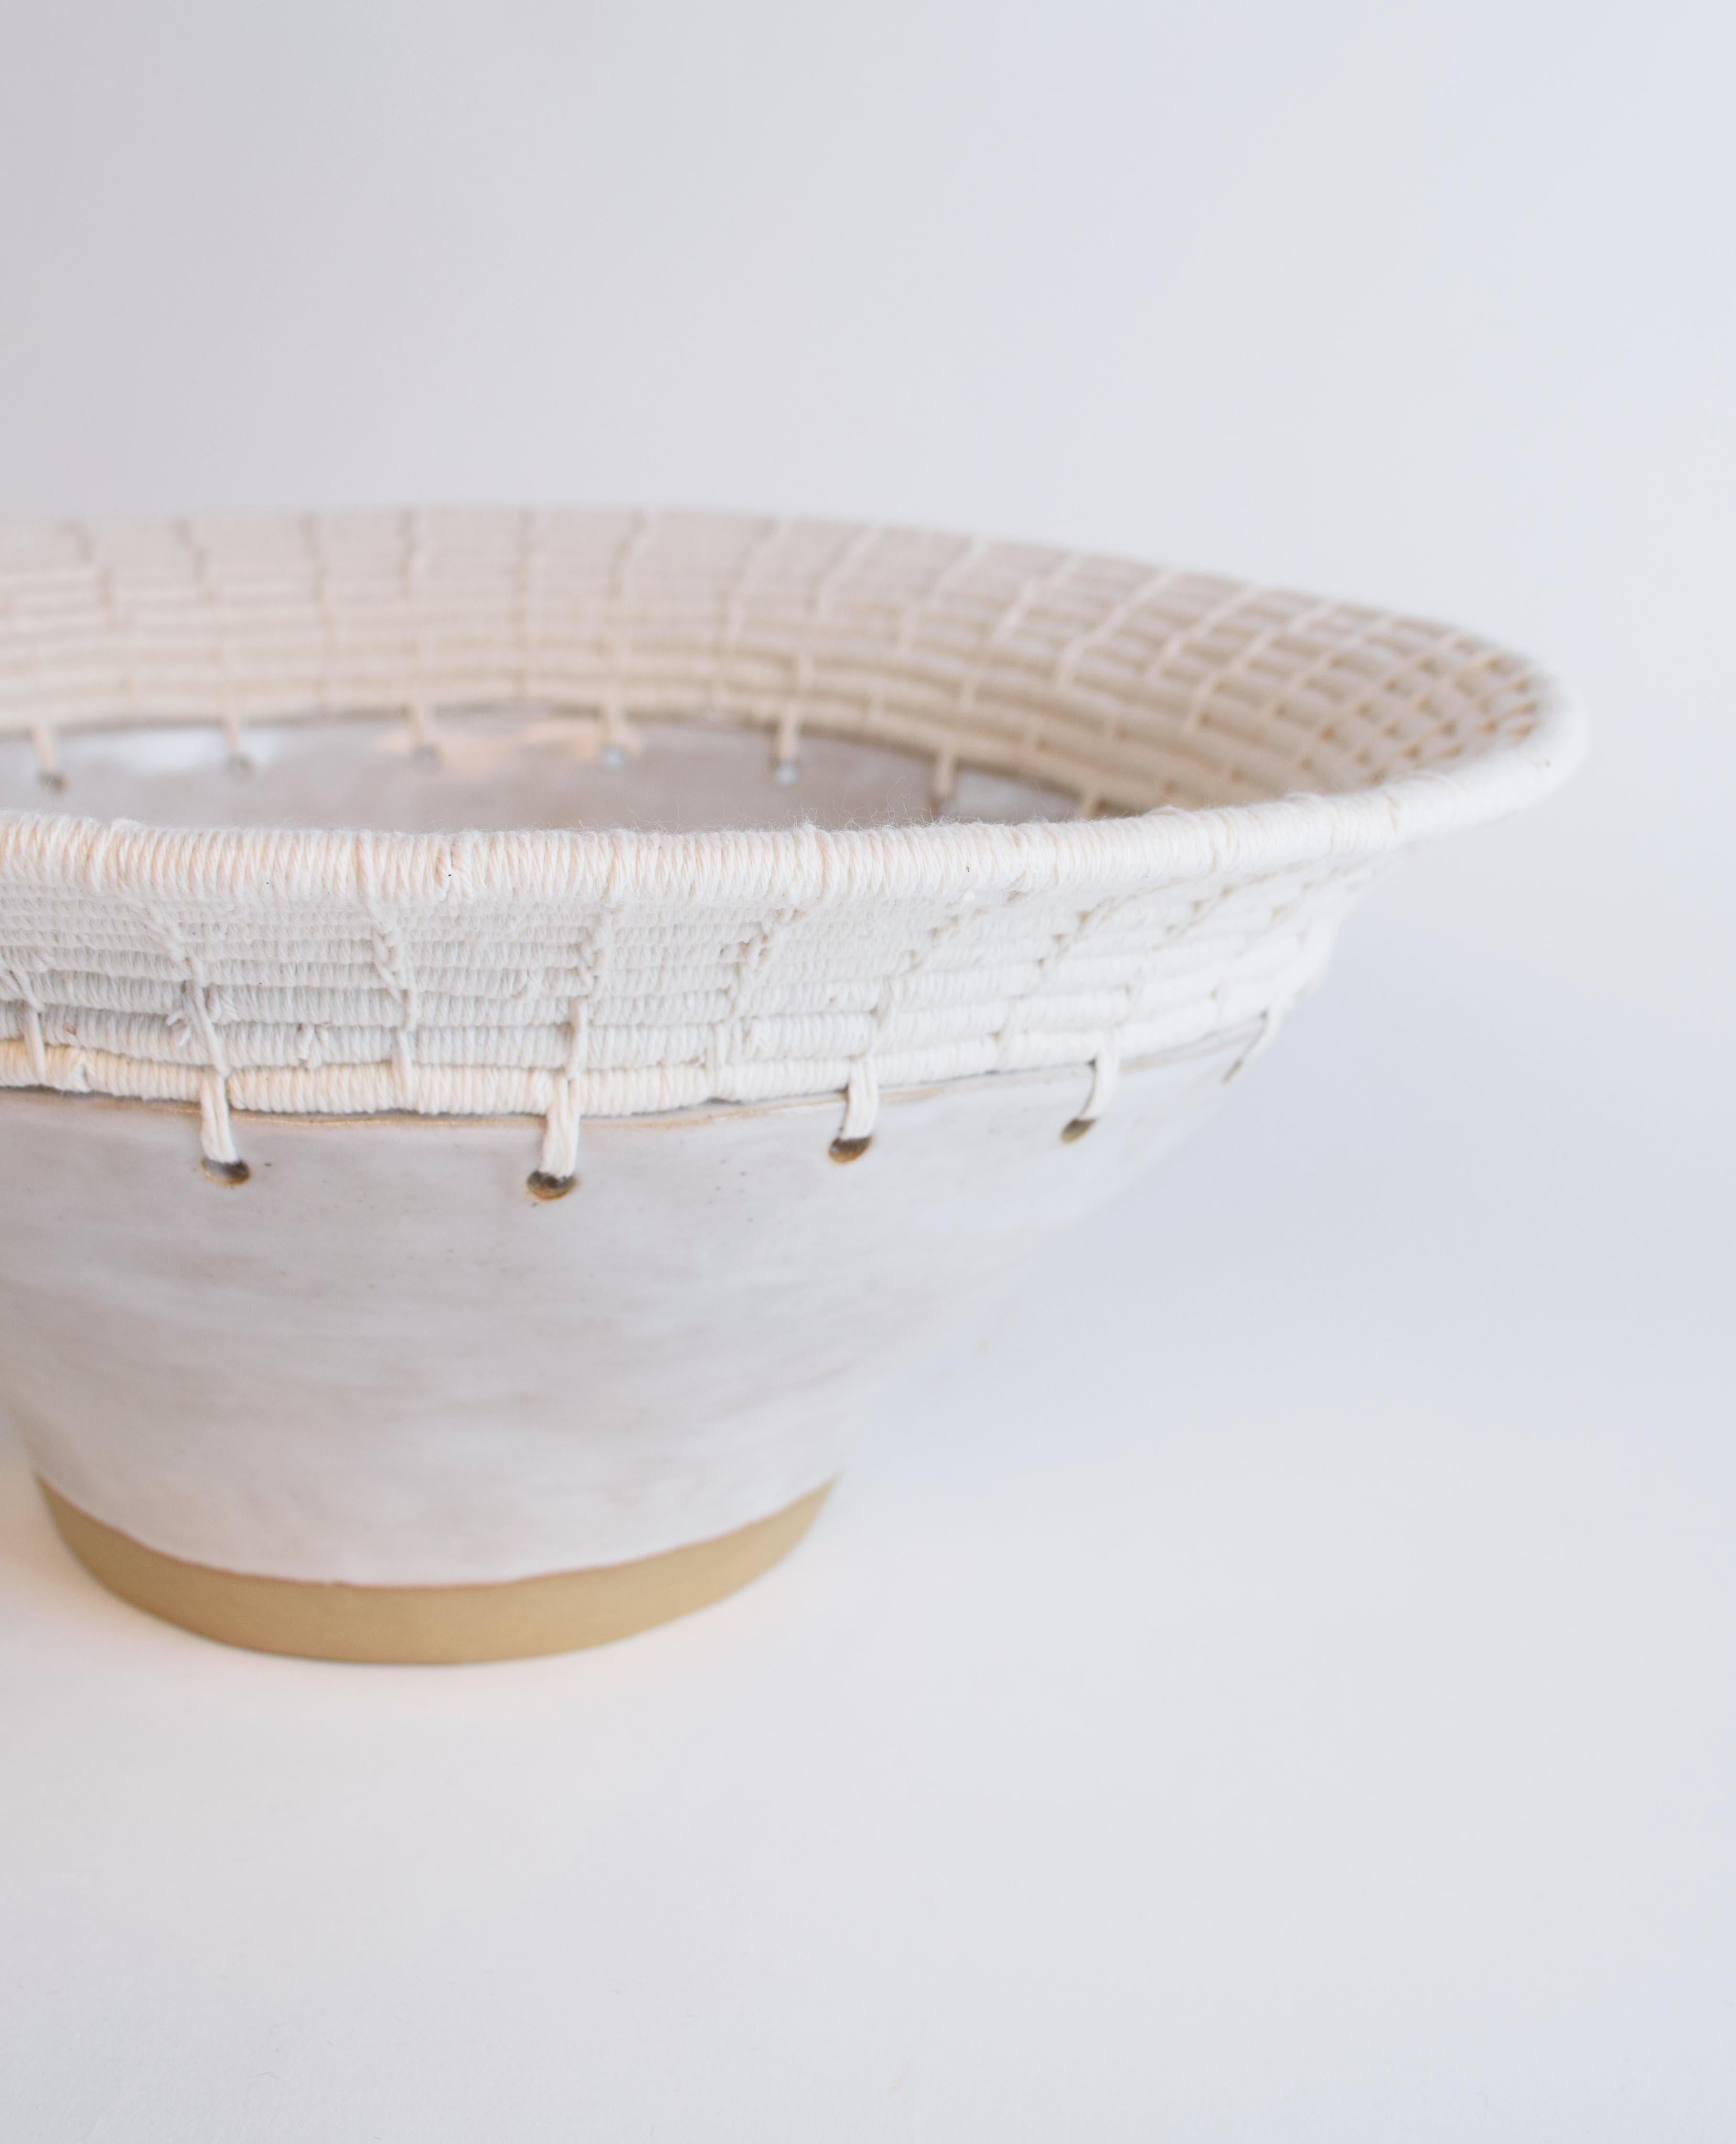 Organic Modern One of a Kind Handmade Ceramic Bowl #807, White Glaze & Woven Cotton Upper For Sale